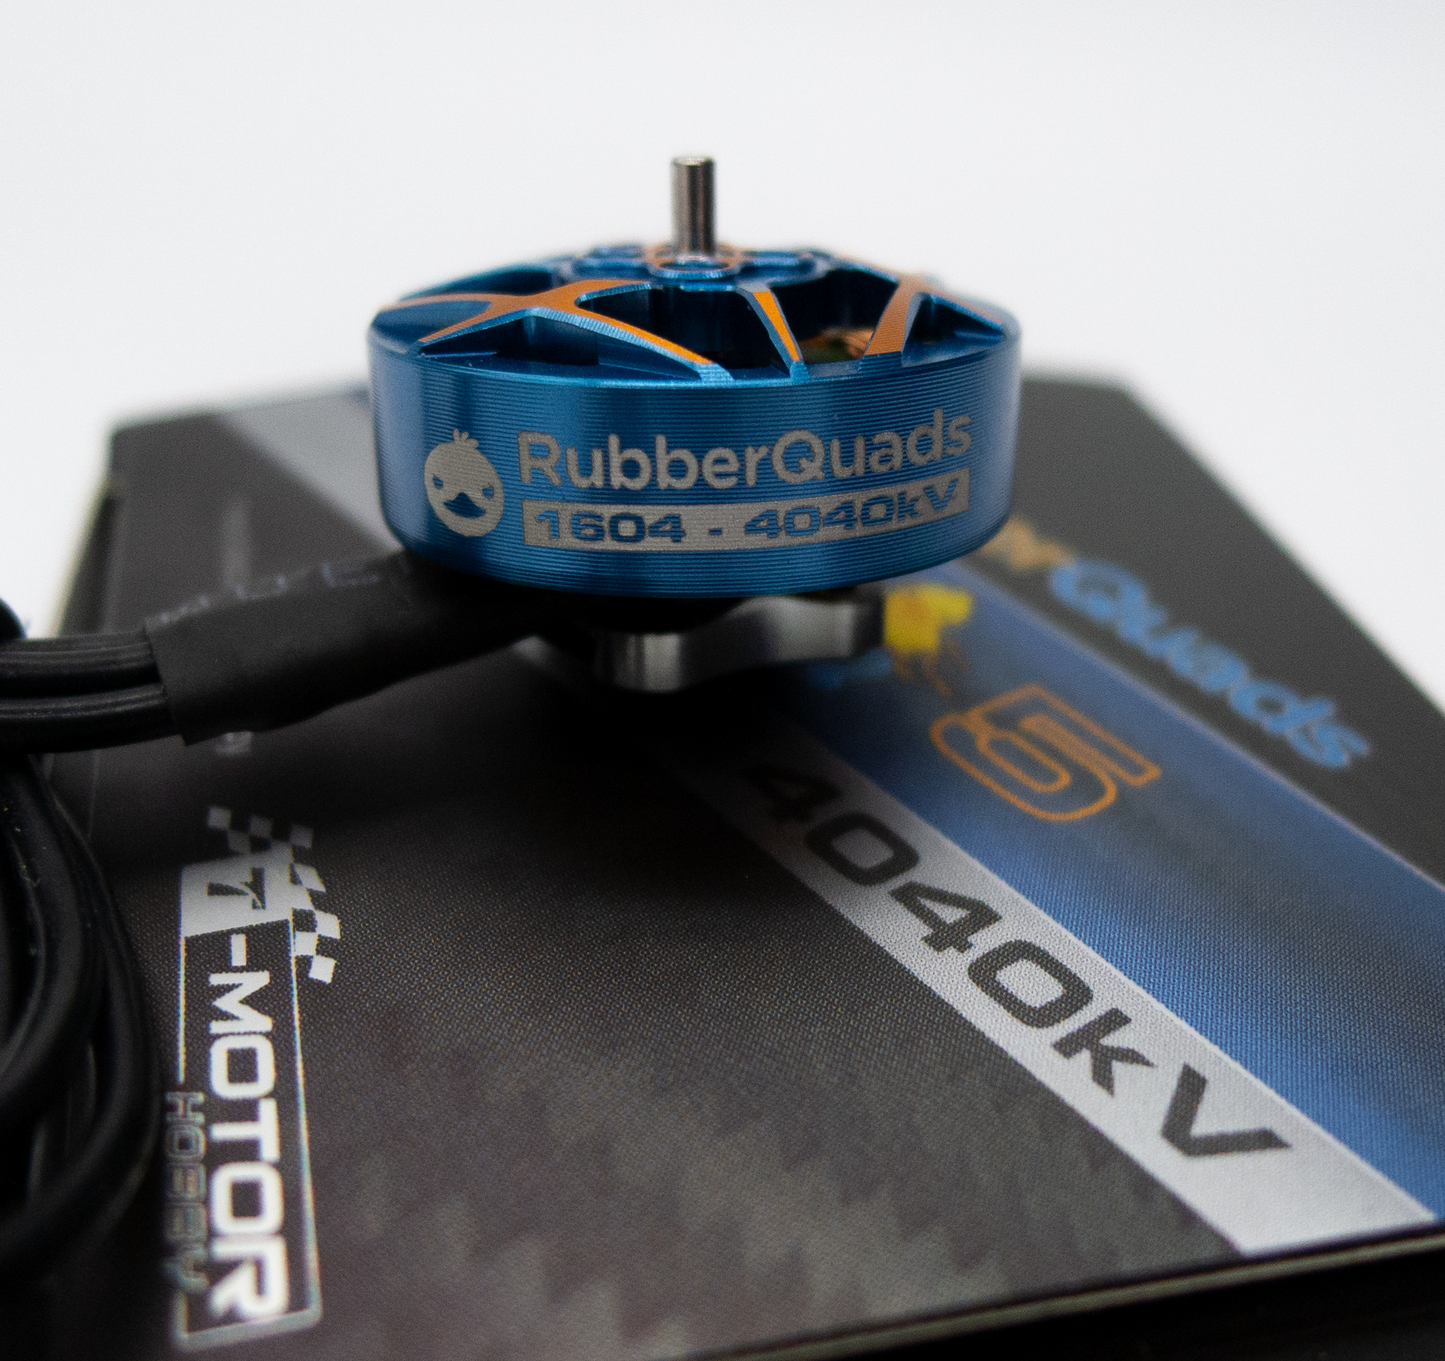 RubberQuads 3-5 brushless motor